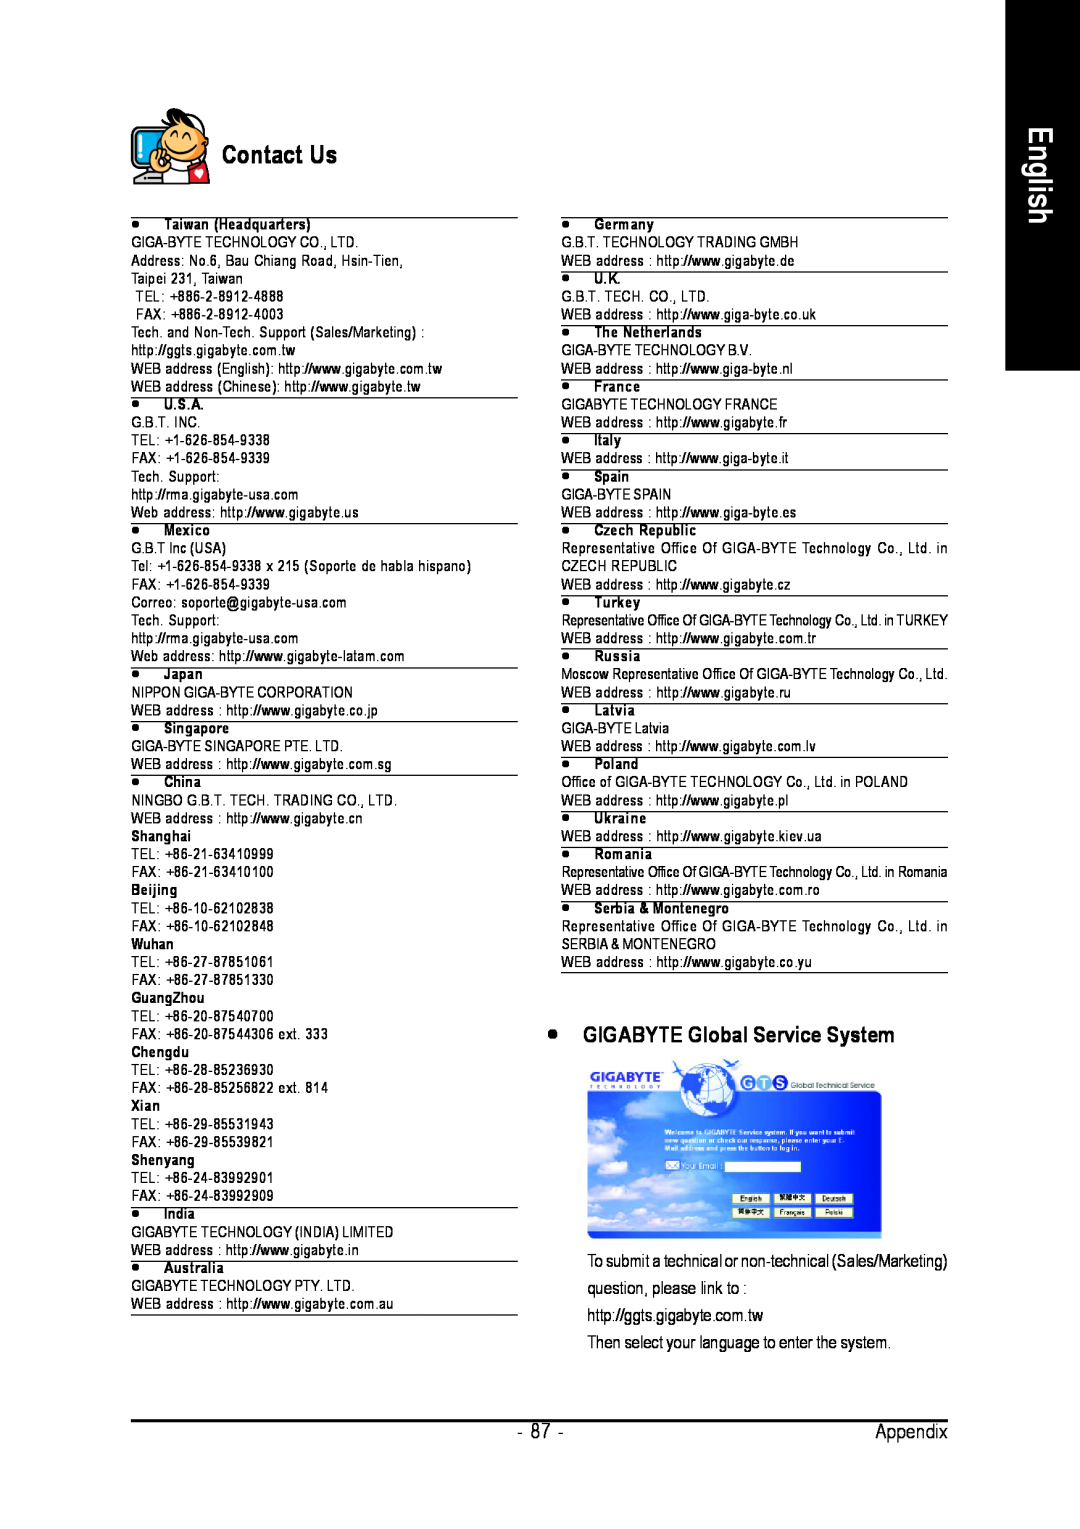 Intel GA-N650SLI-DS4 user manual English, Contact Us, y GIGABYTE Global Service System 